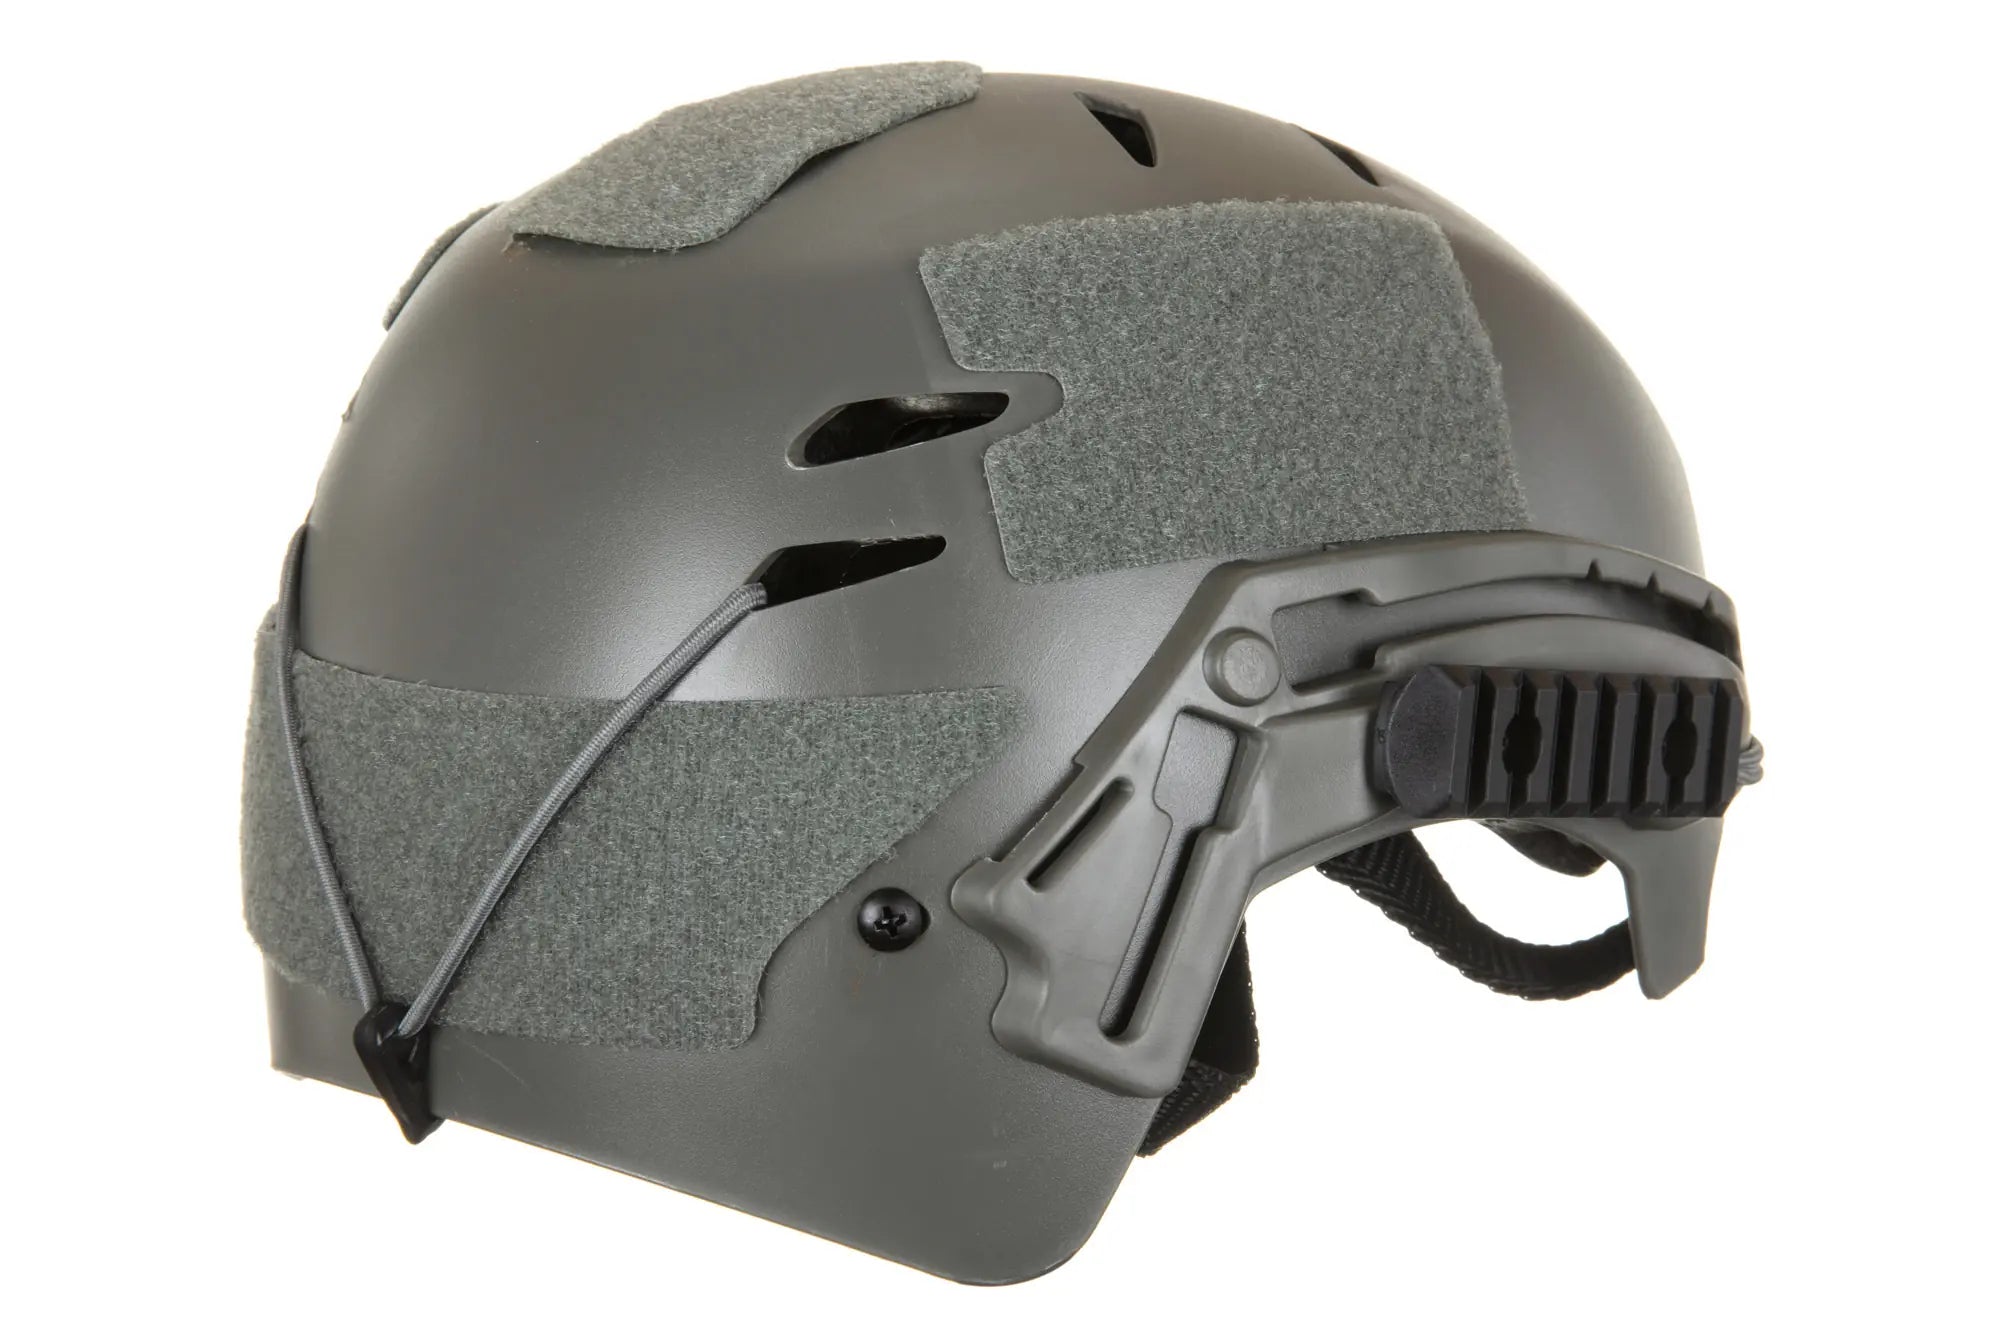 Replica of Emerson Gear EXF Bump Protective Helmet Foliage Green-2